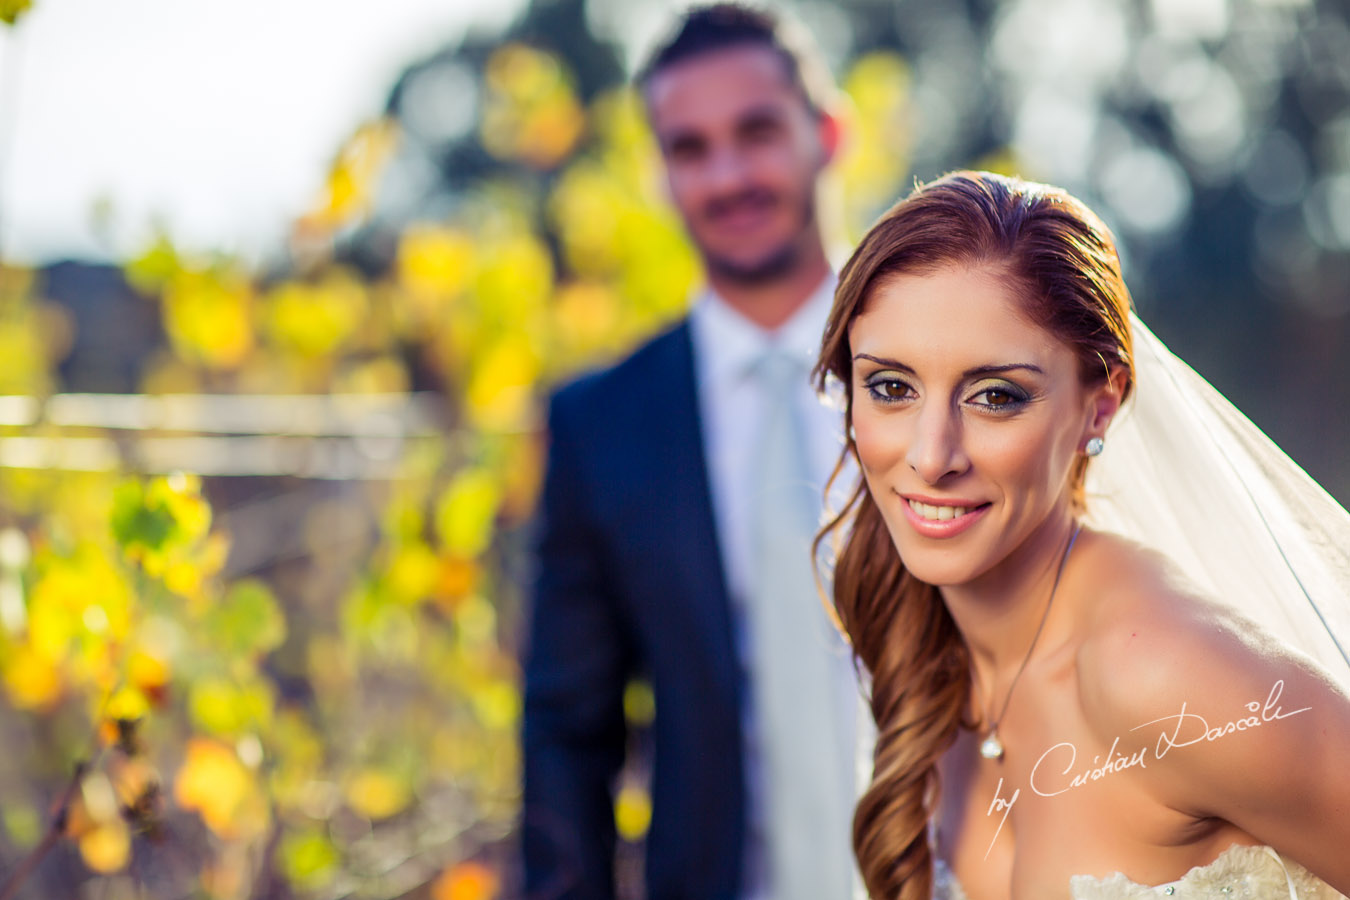 An Enchanted Wedding Photo Session - Marina & Xristos. Cyprus Photographer: Cristian Dascalu